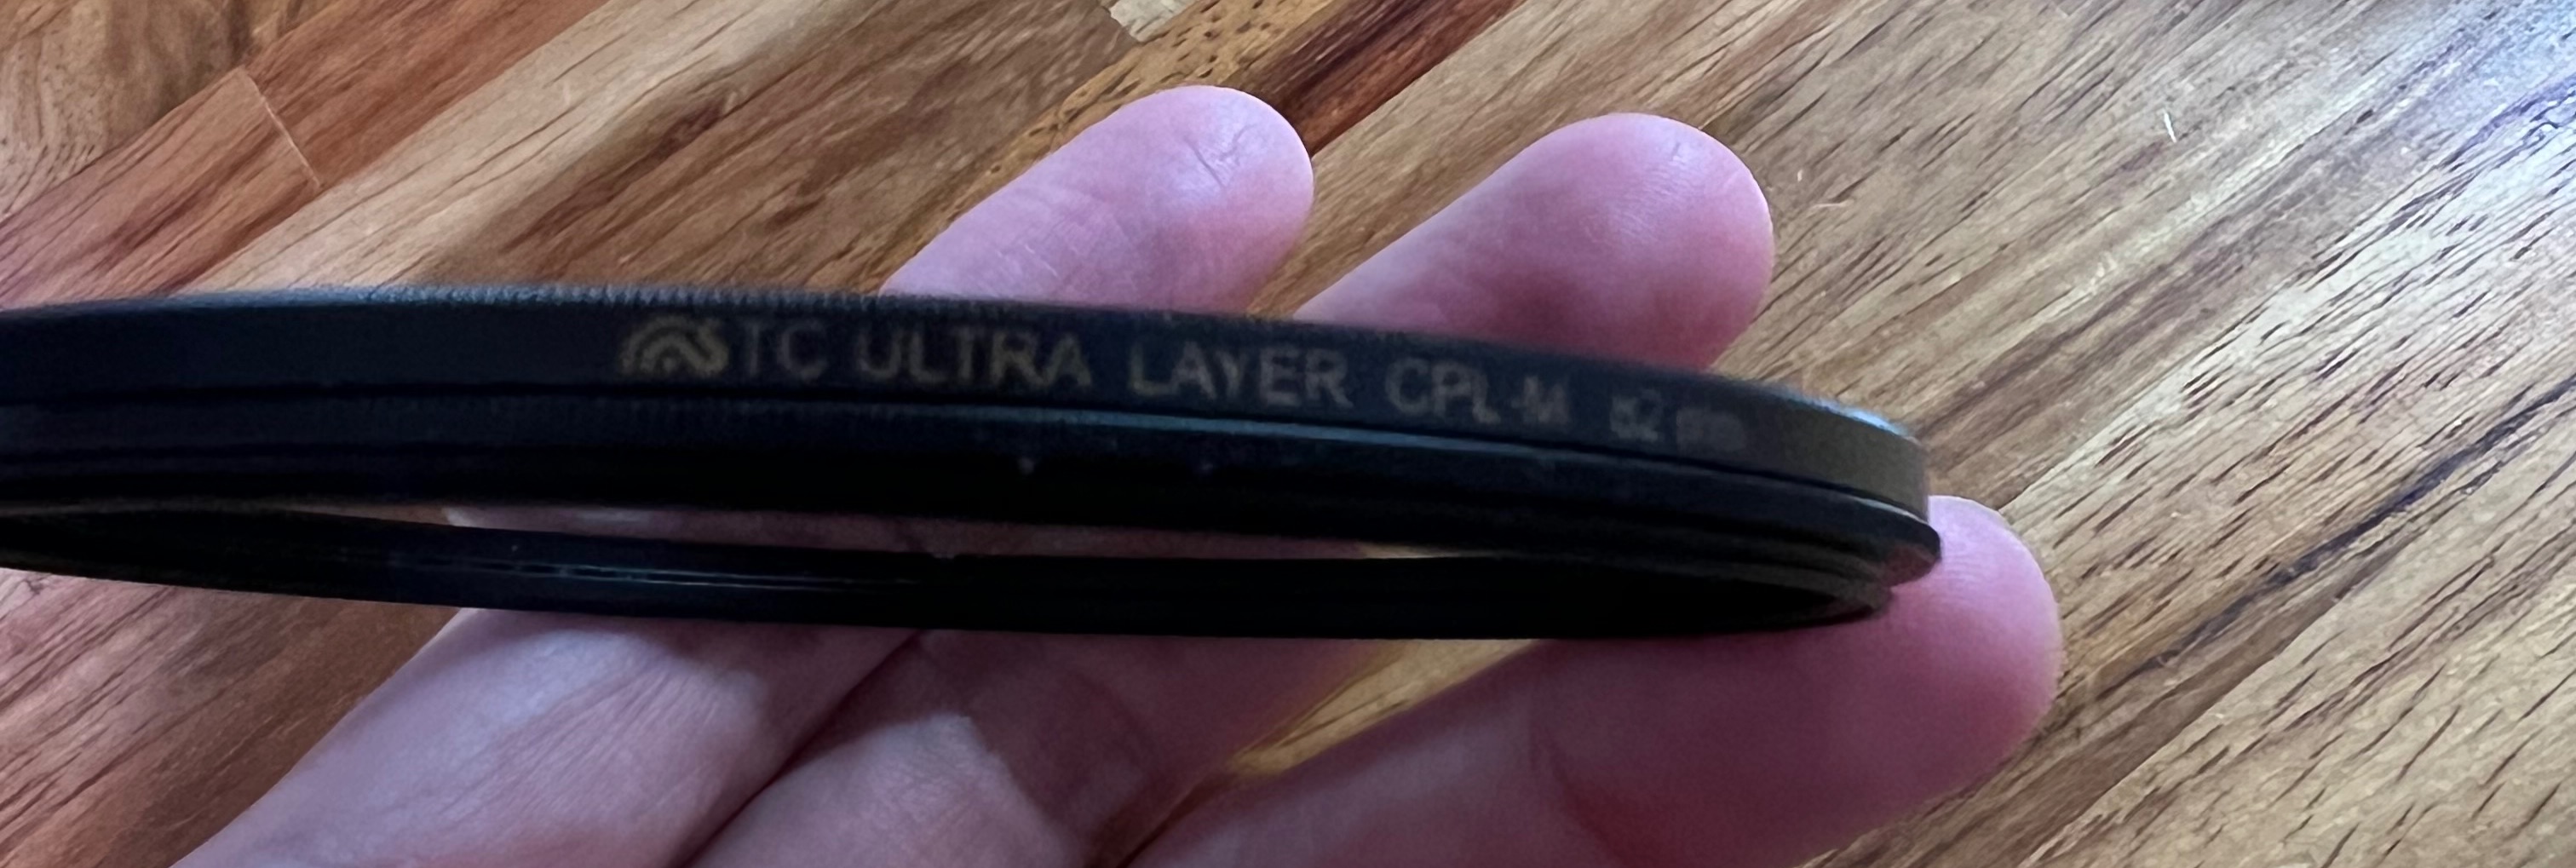 STC ultra layer cpl-m 82mm